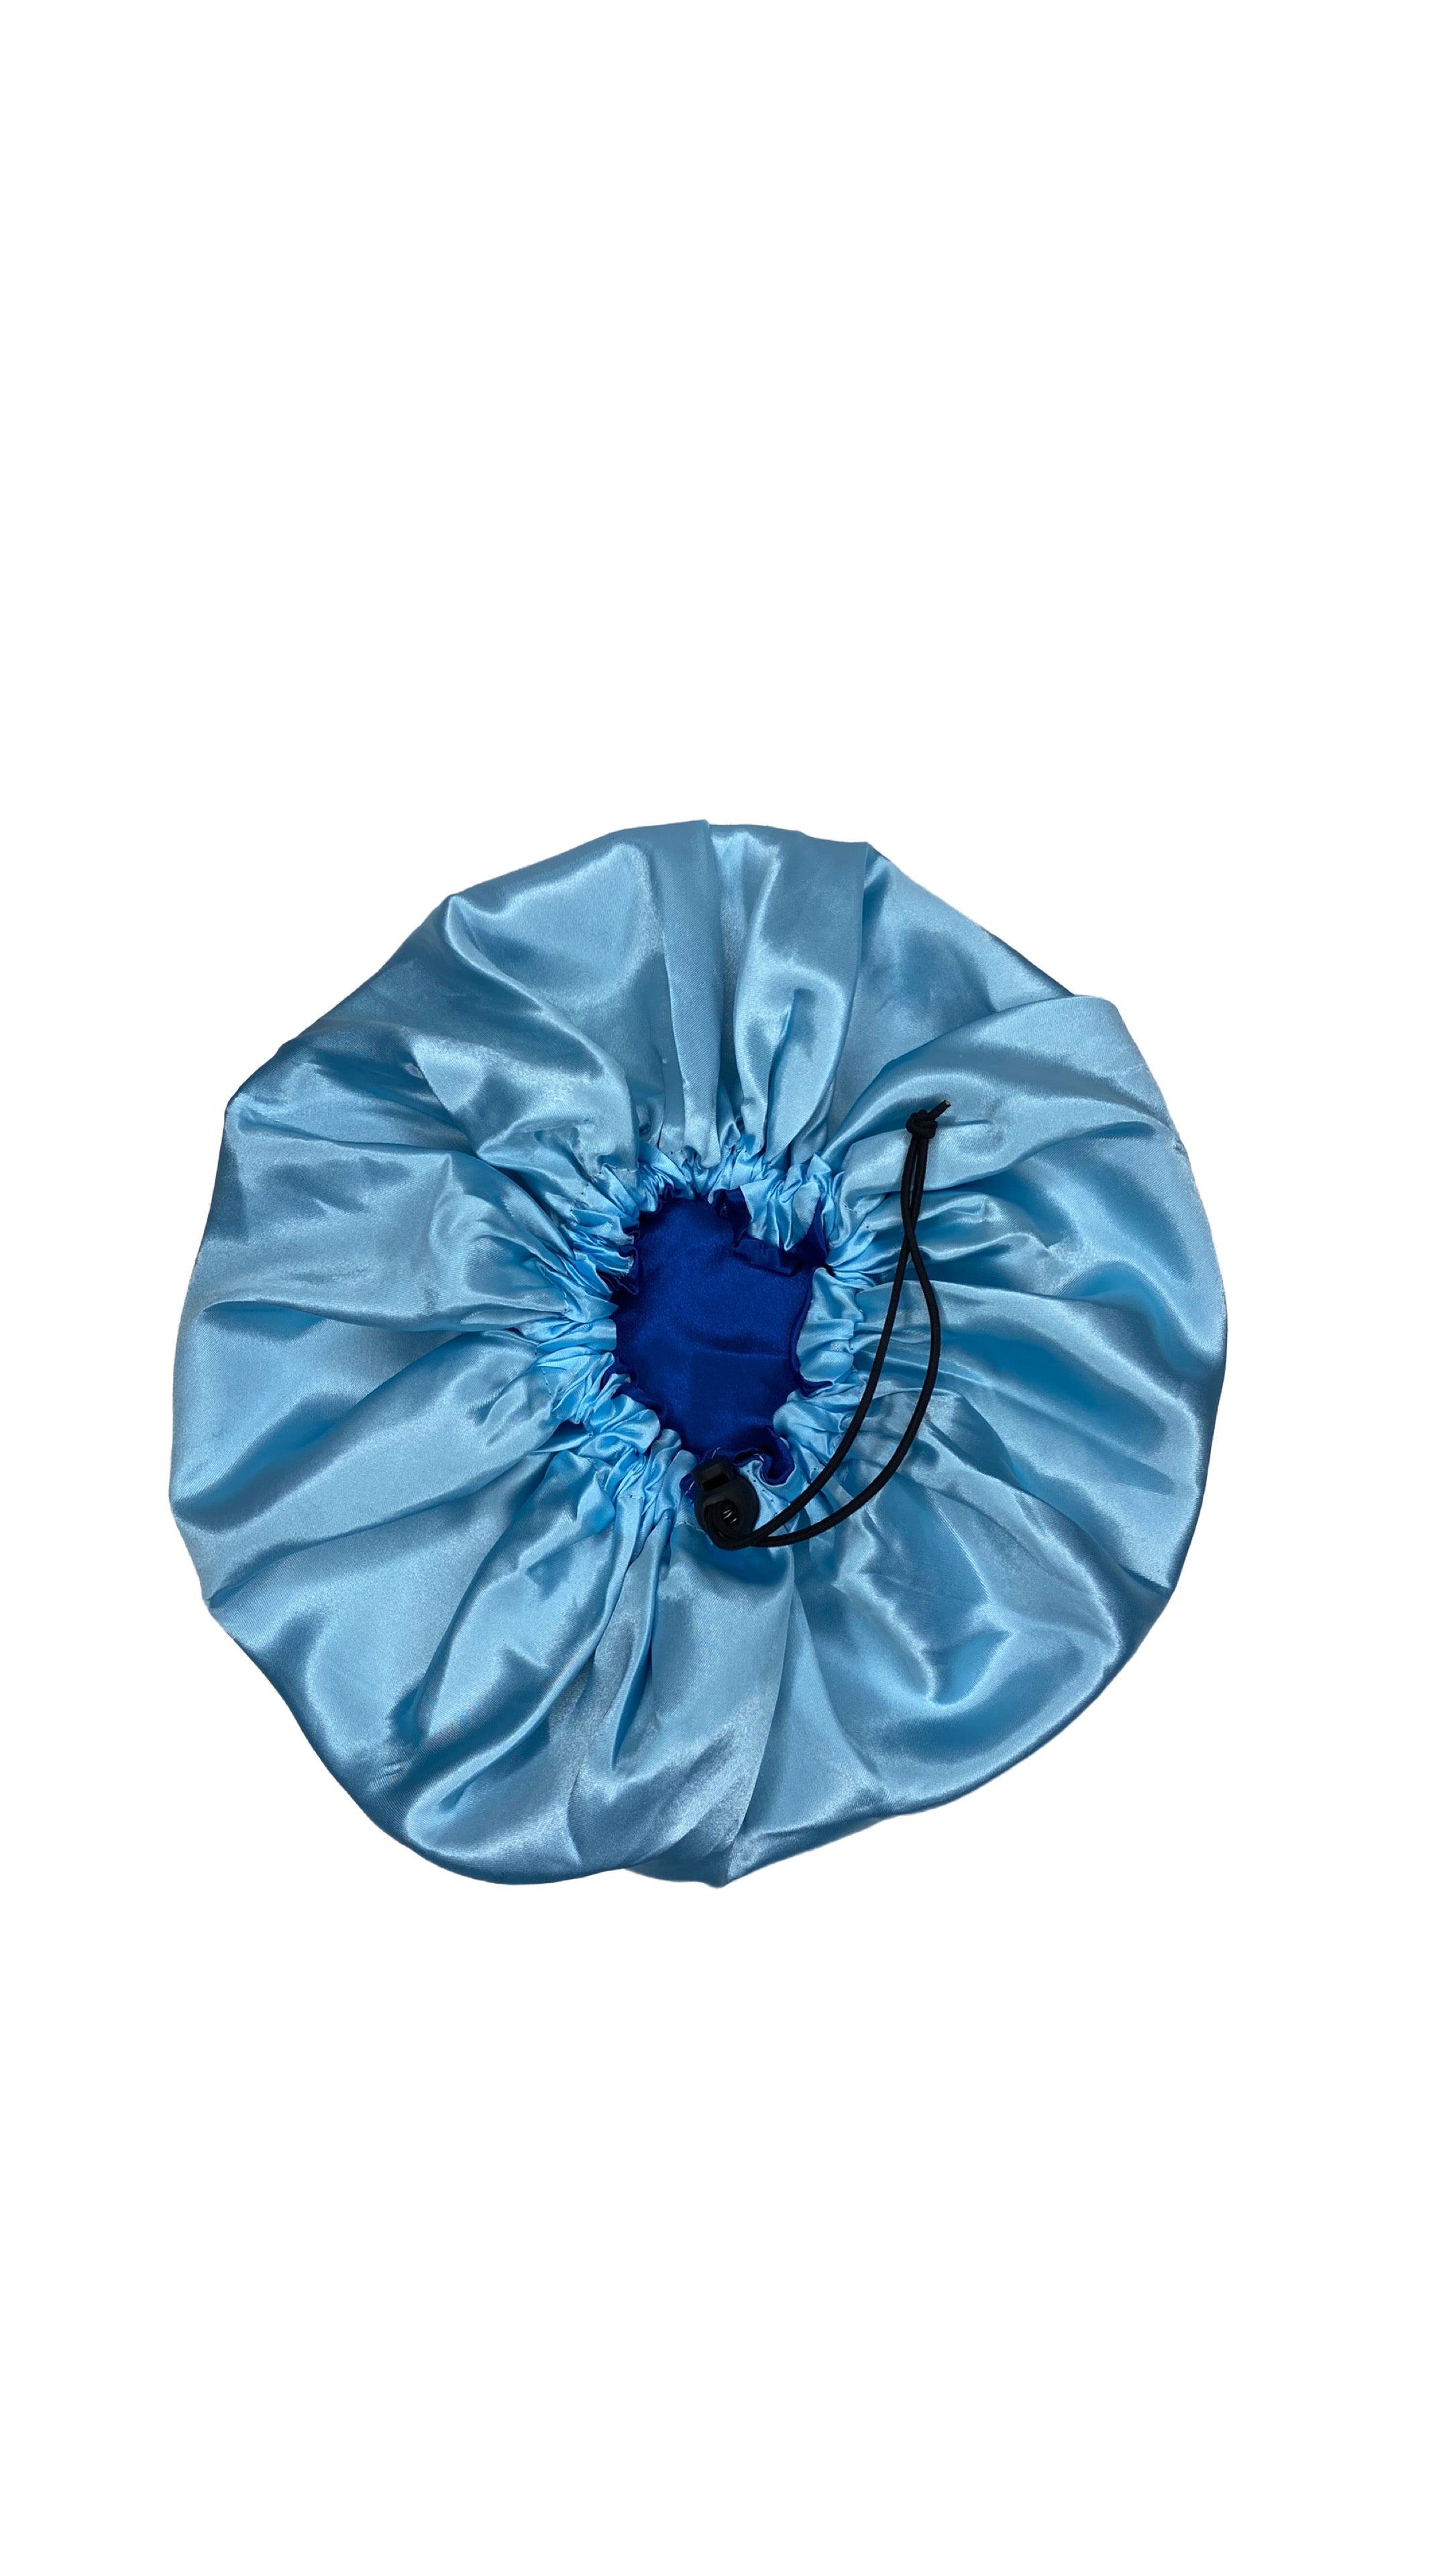 Navy blue reversible silky satin bonnet